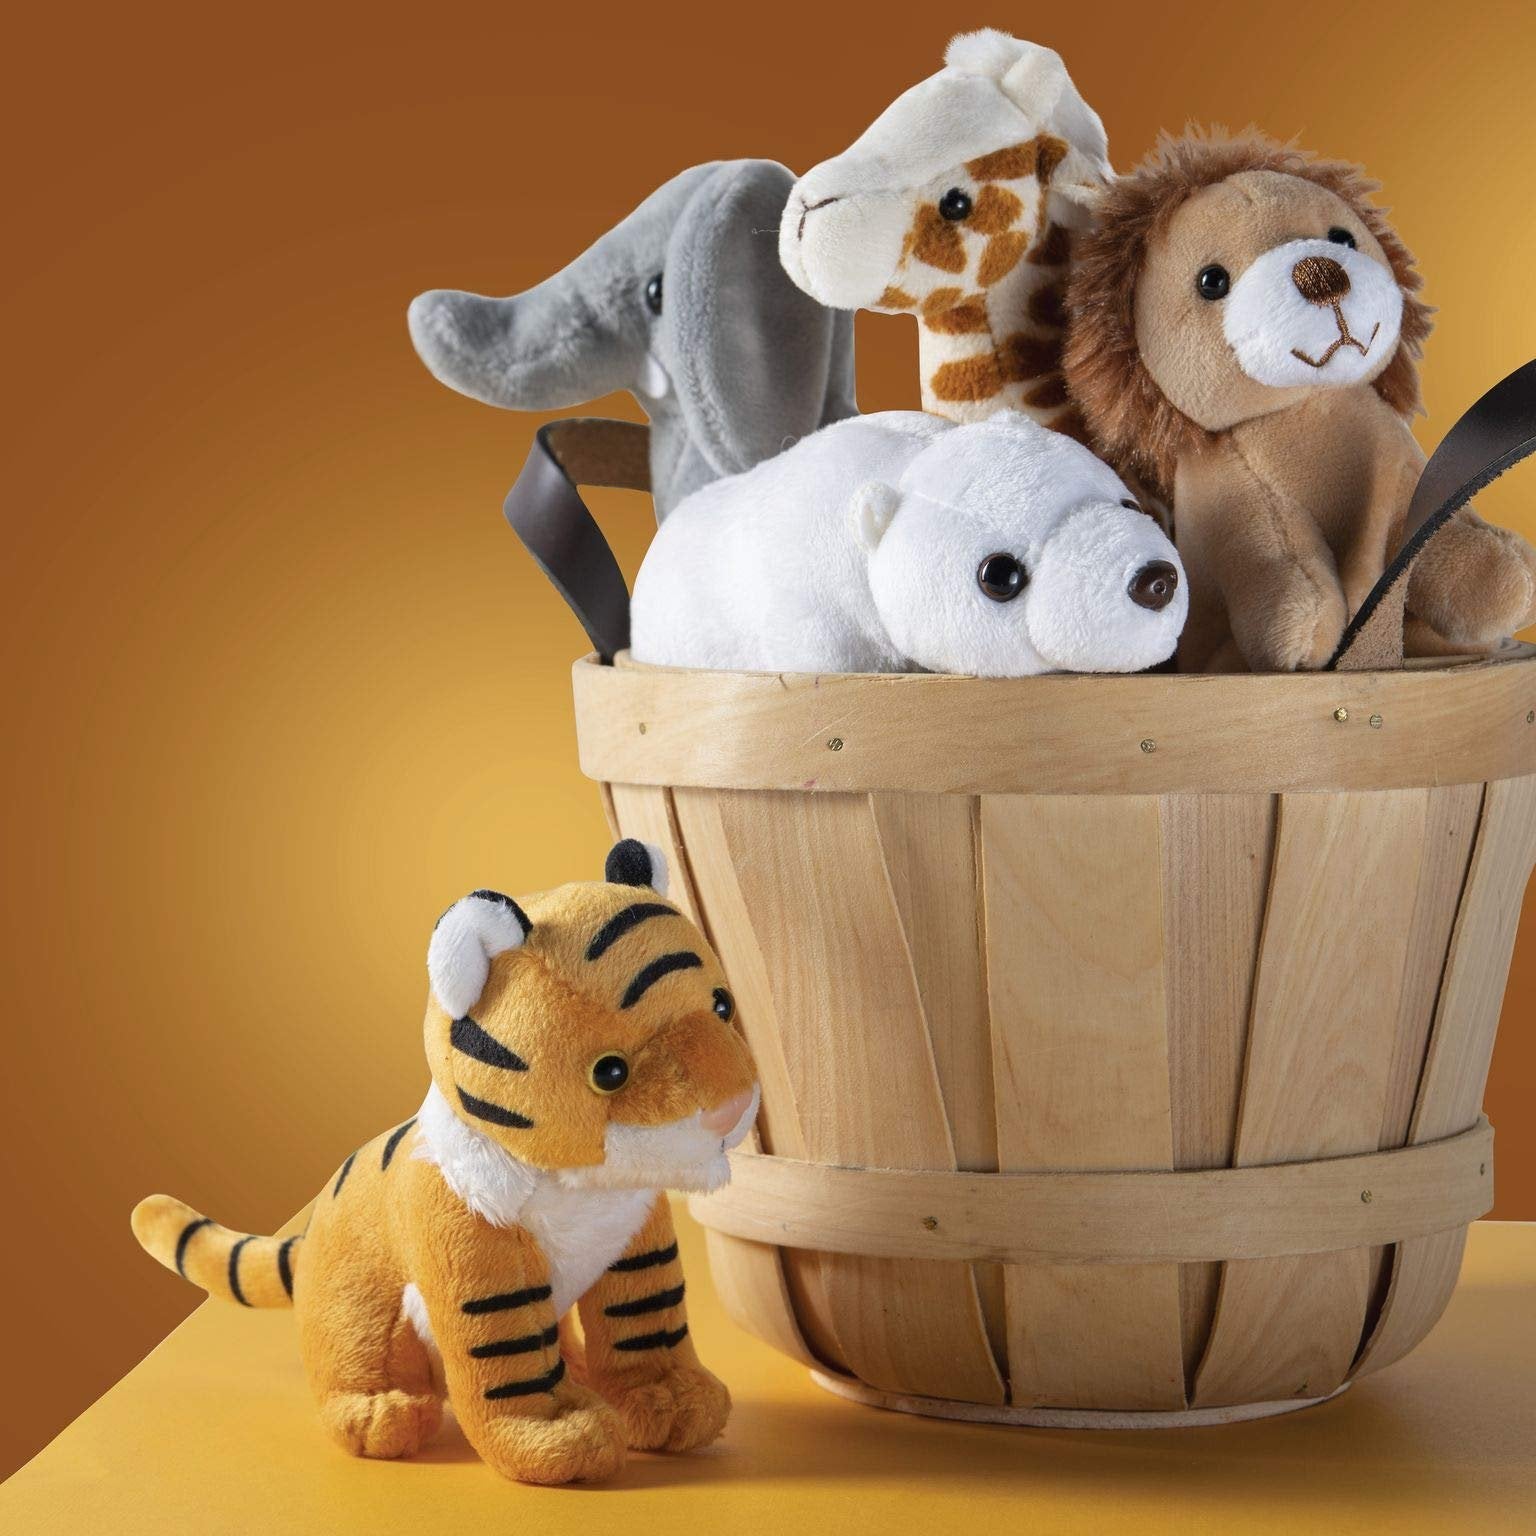 PREXTEX Safari Friends Stuffed Animal Gift Set - 5 Small Plush Stuffed Animals (Giraffe, Tiger, Lion, Polar Bear, Elephant) Zoo Animals - Machine Washable Stuffed Animals for Boys & Girls Ages 3-5+